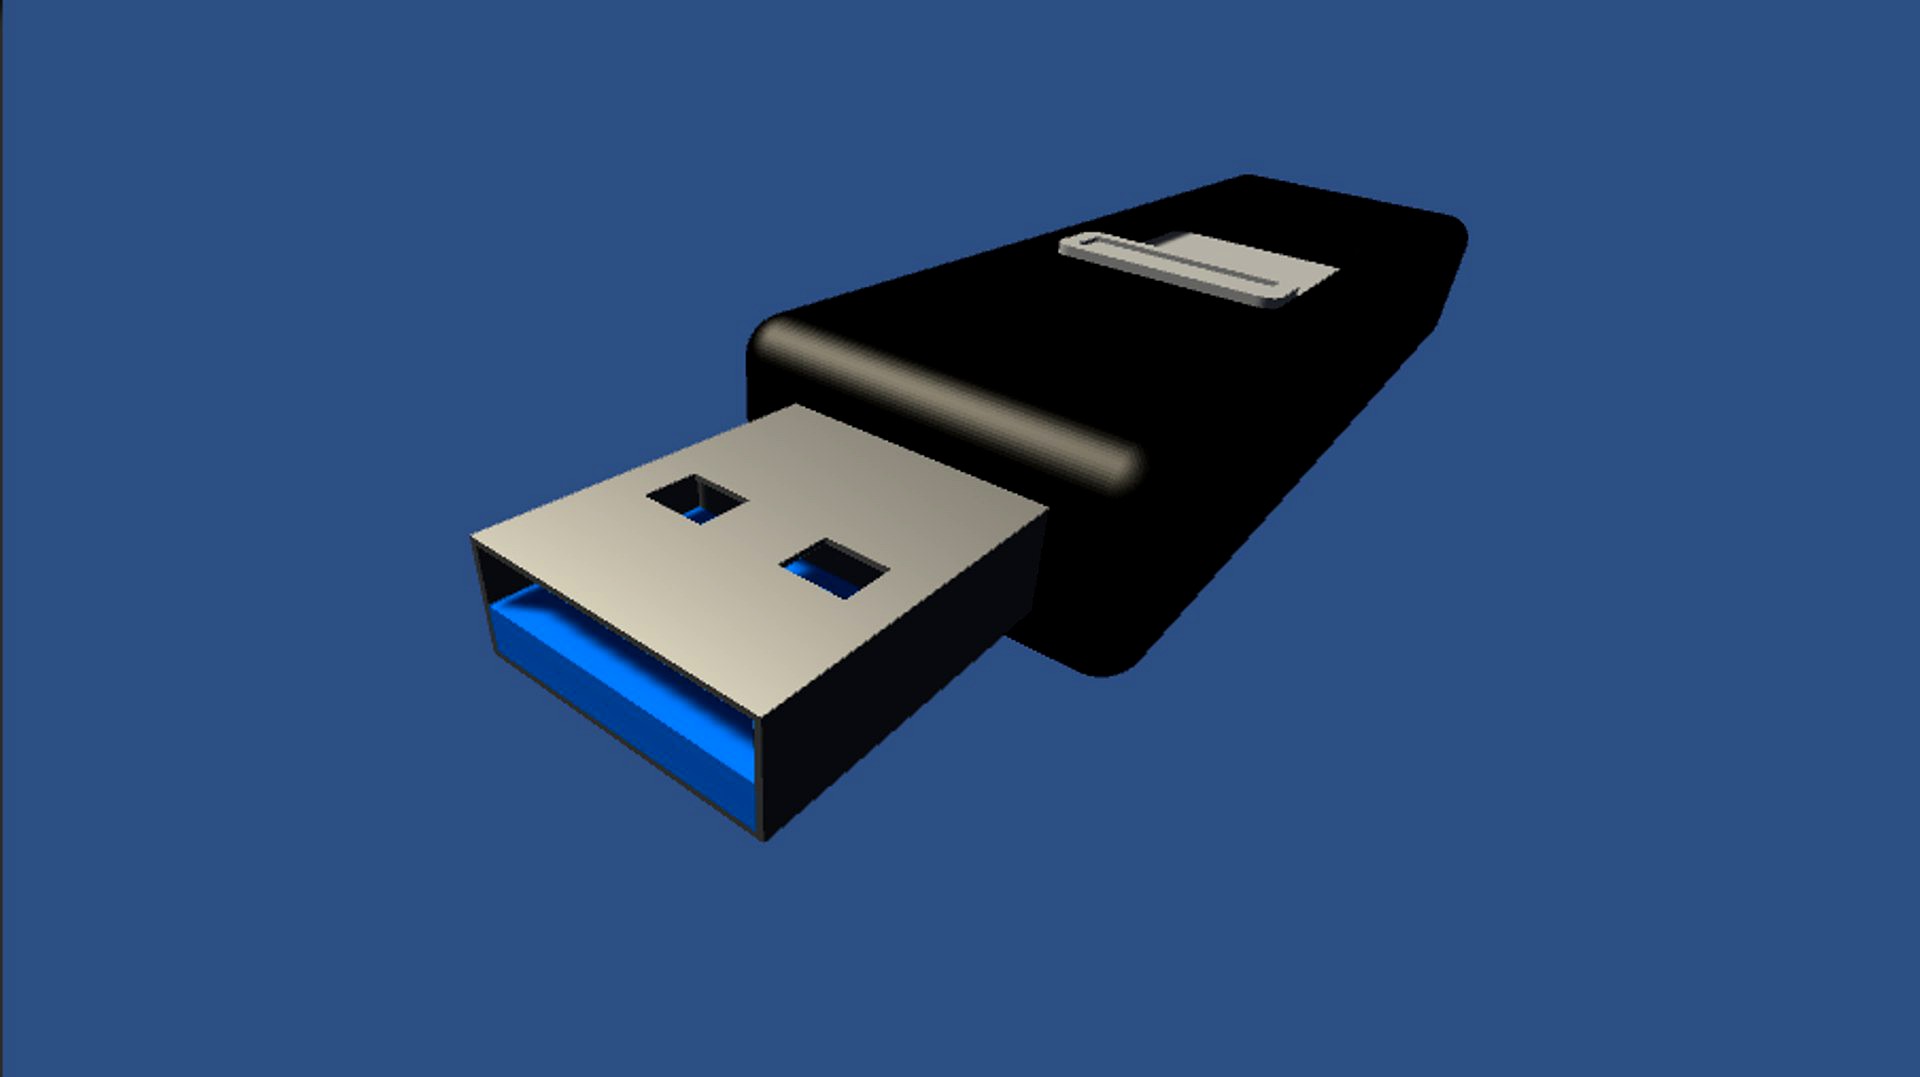 USB Flash Drive - Slideable